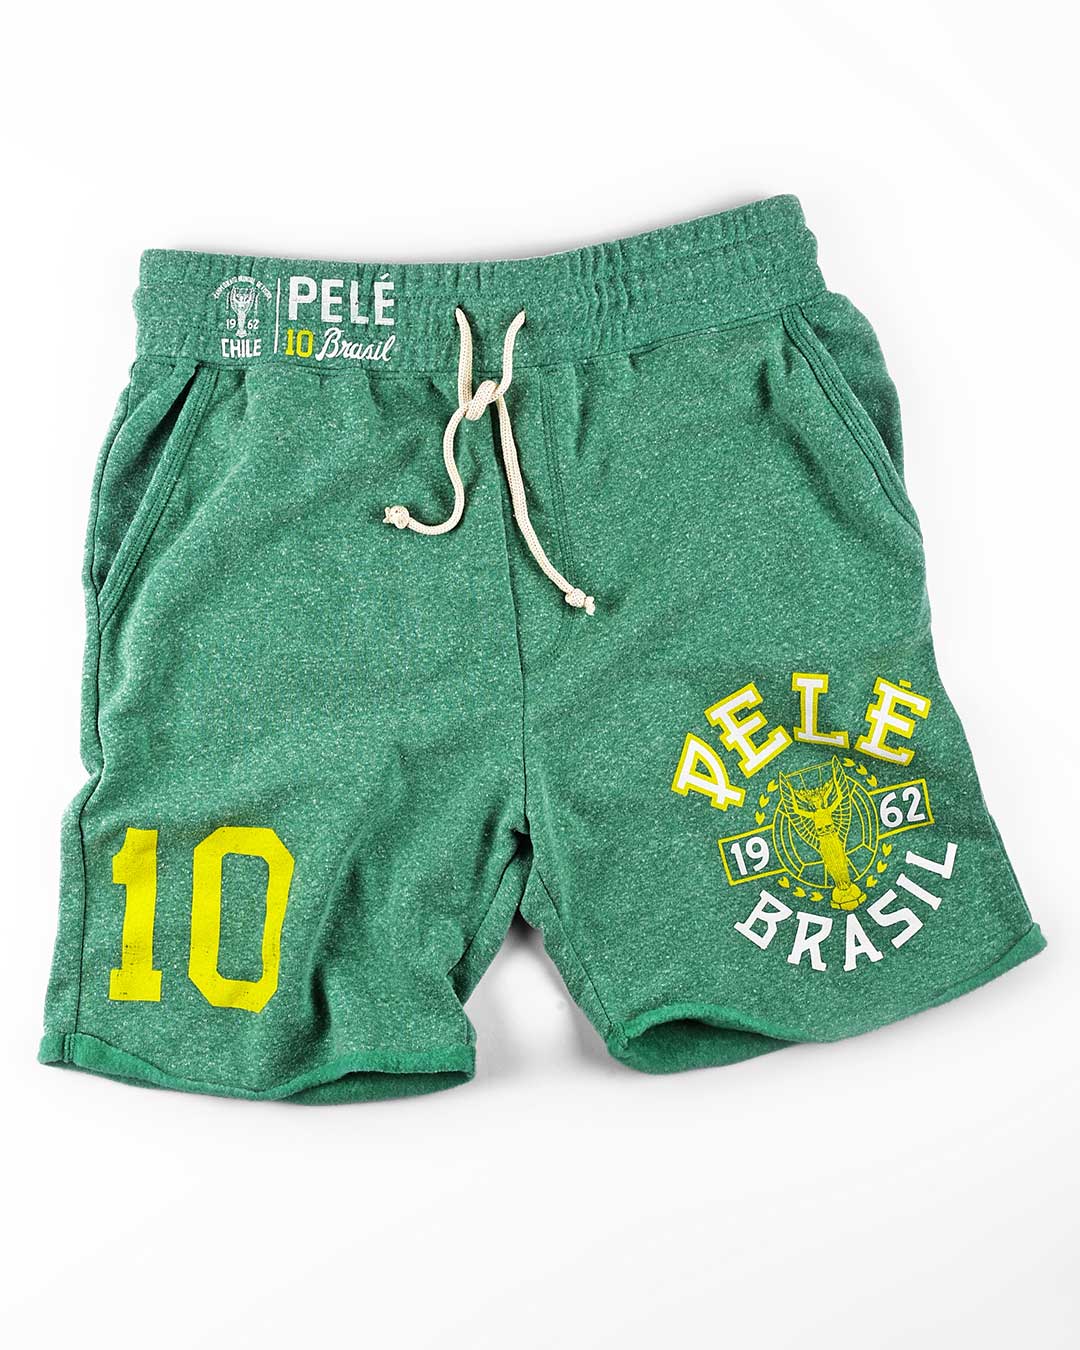 Pelé 1962 Brasil Green Shorts - Roots of Fight